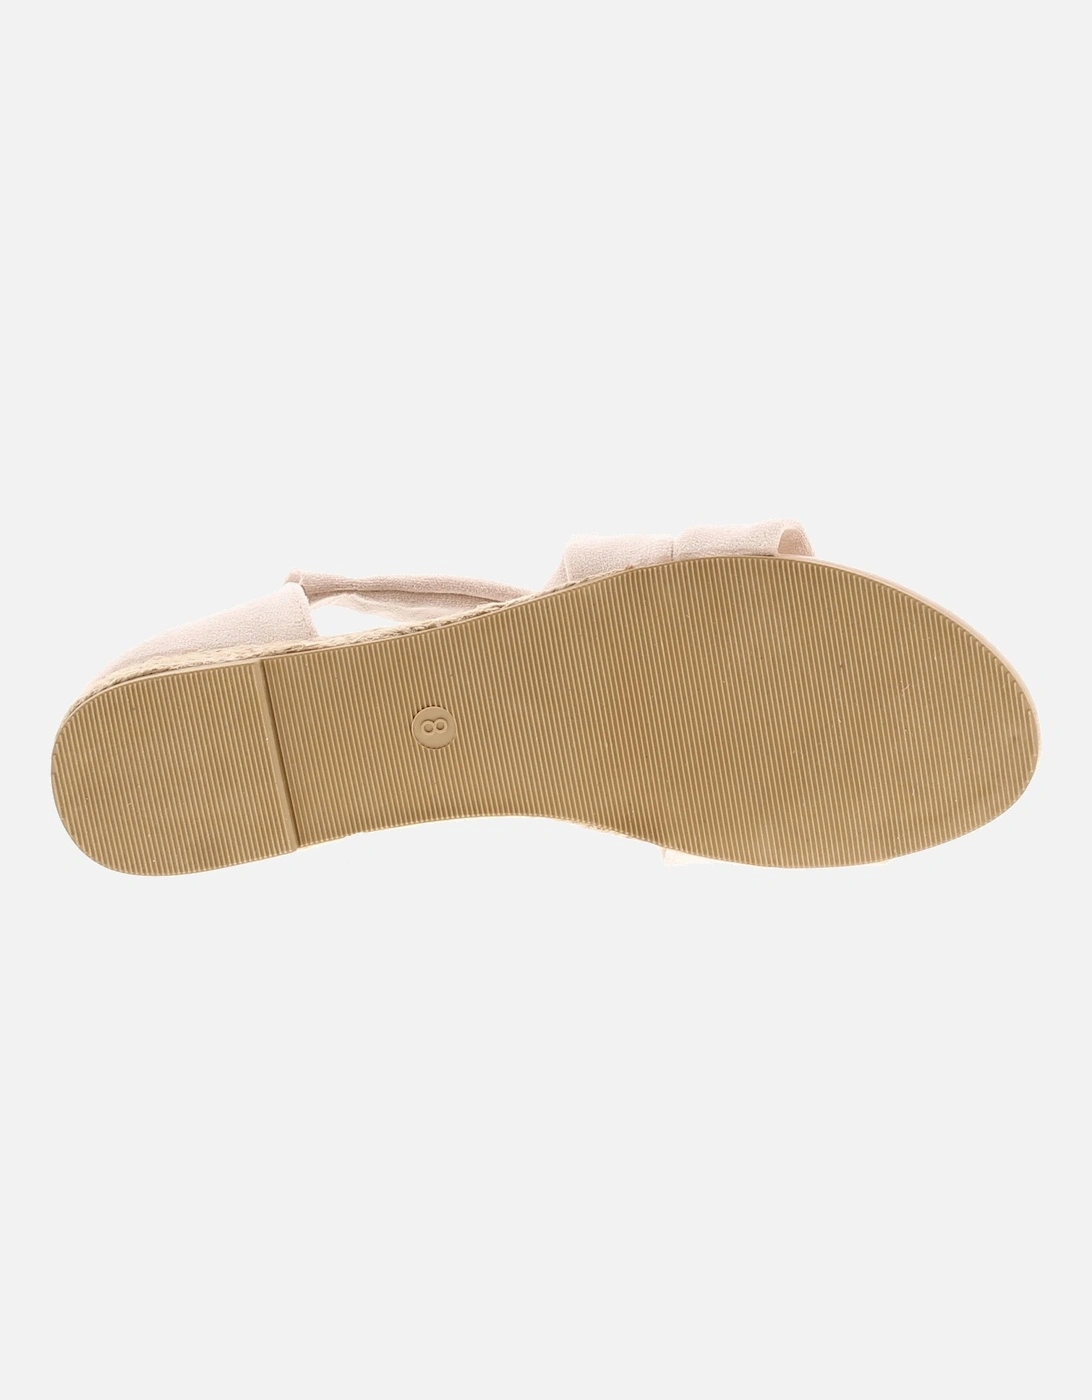 Womens Flat Sandals Bureau Slip On beige UK Size